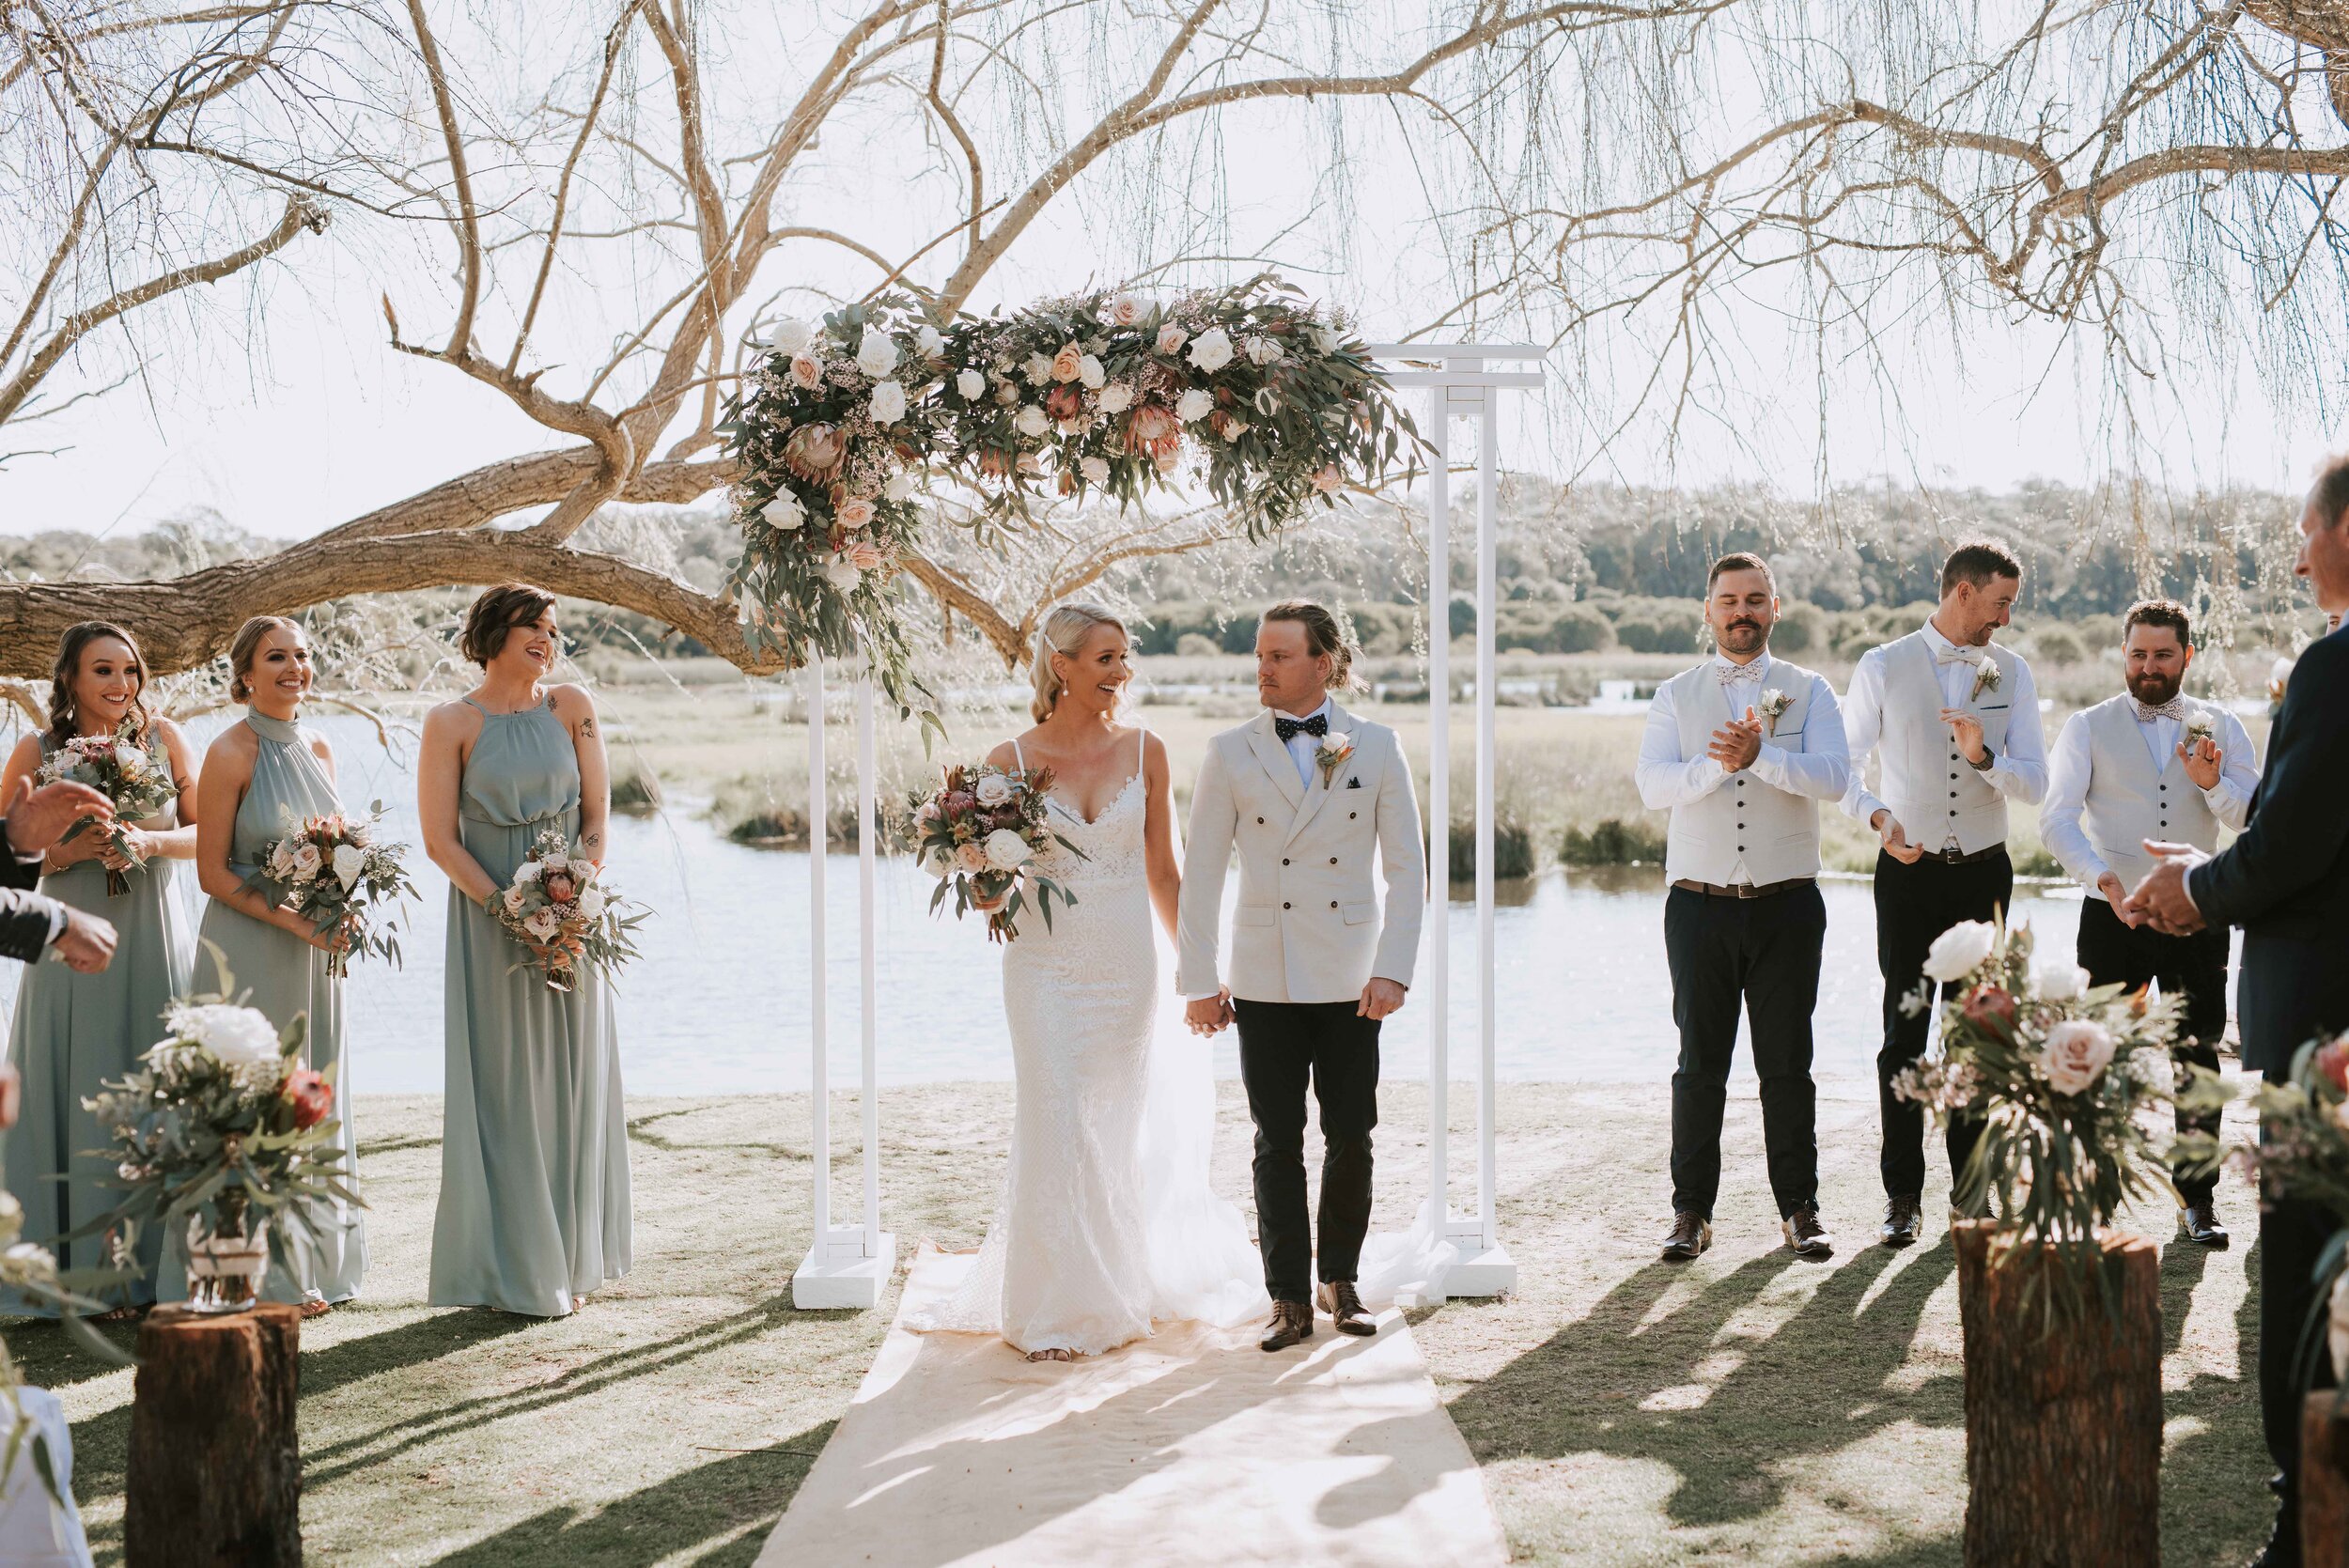 Yanchep park beautiful spring wedding | Perth wedding photographer Amy Skinner-419.jpg